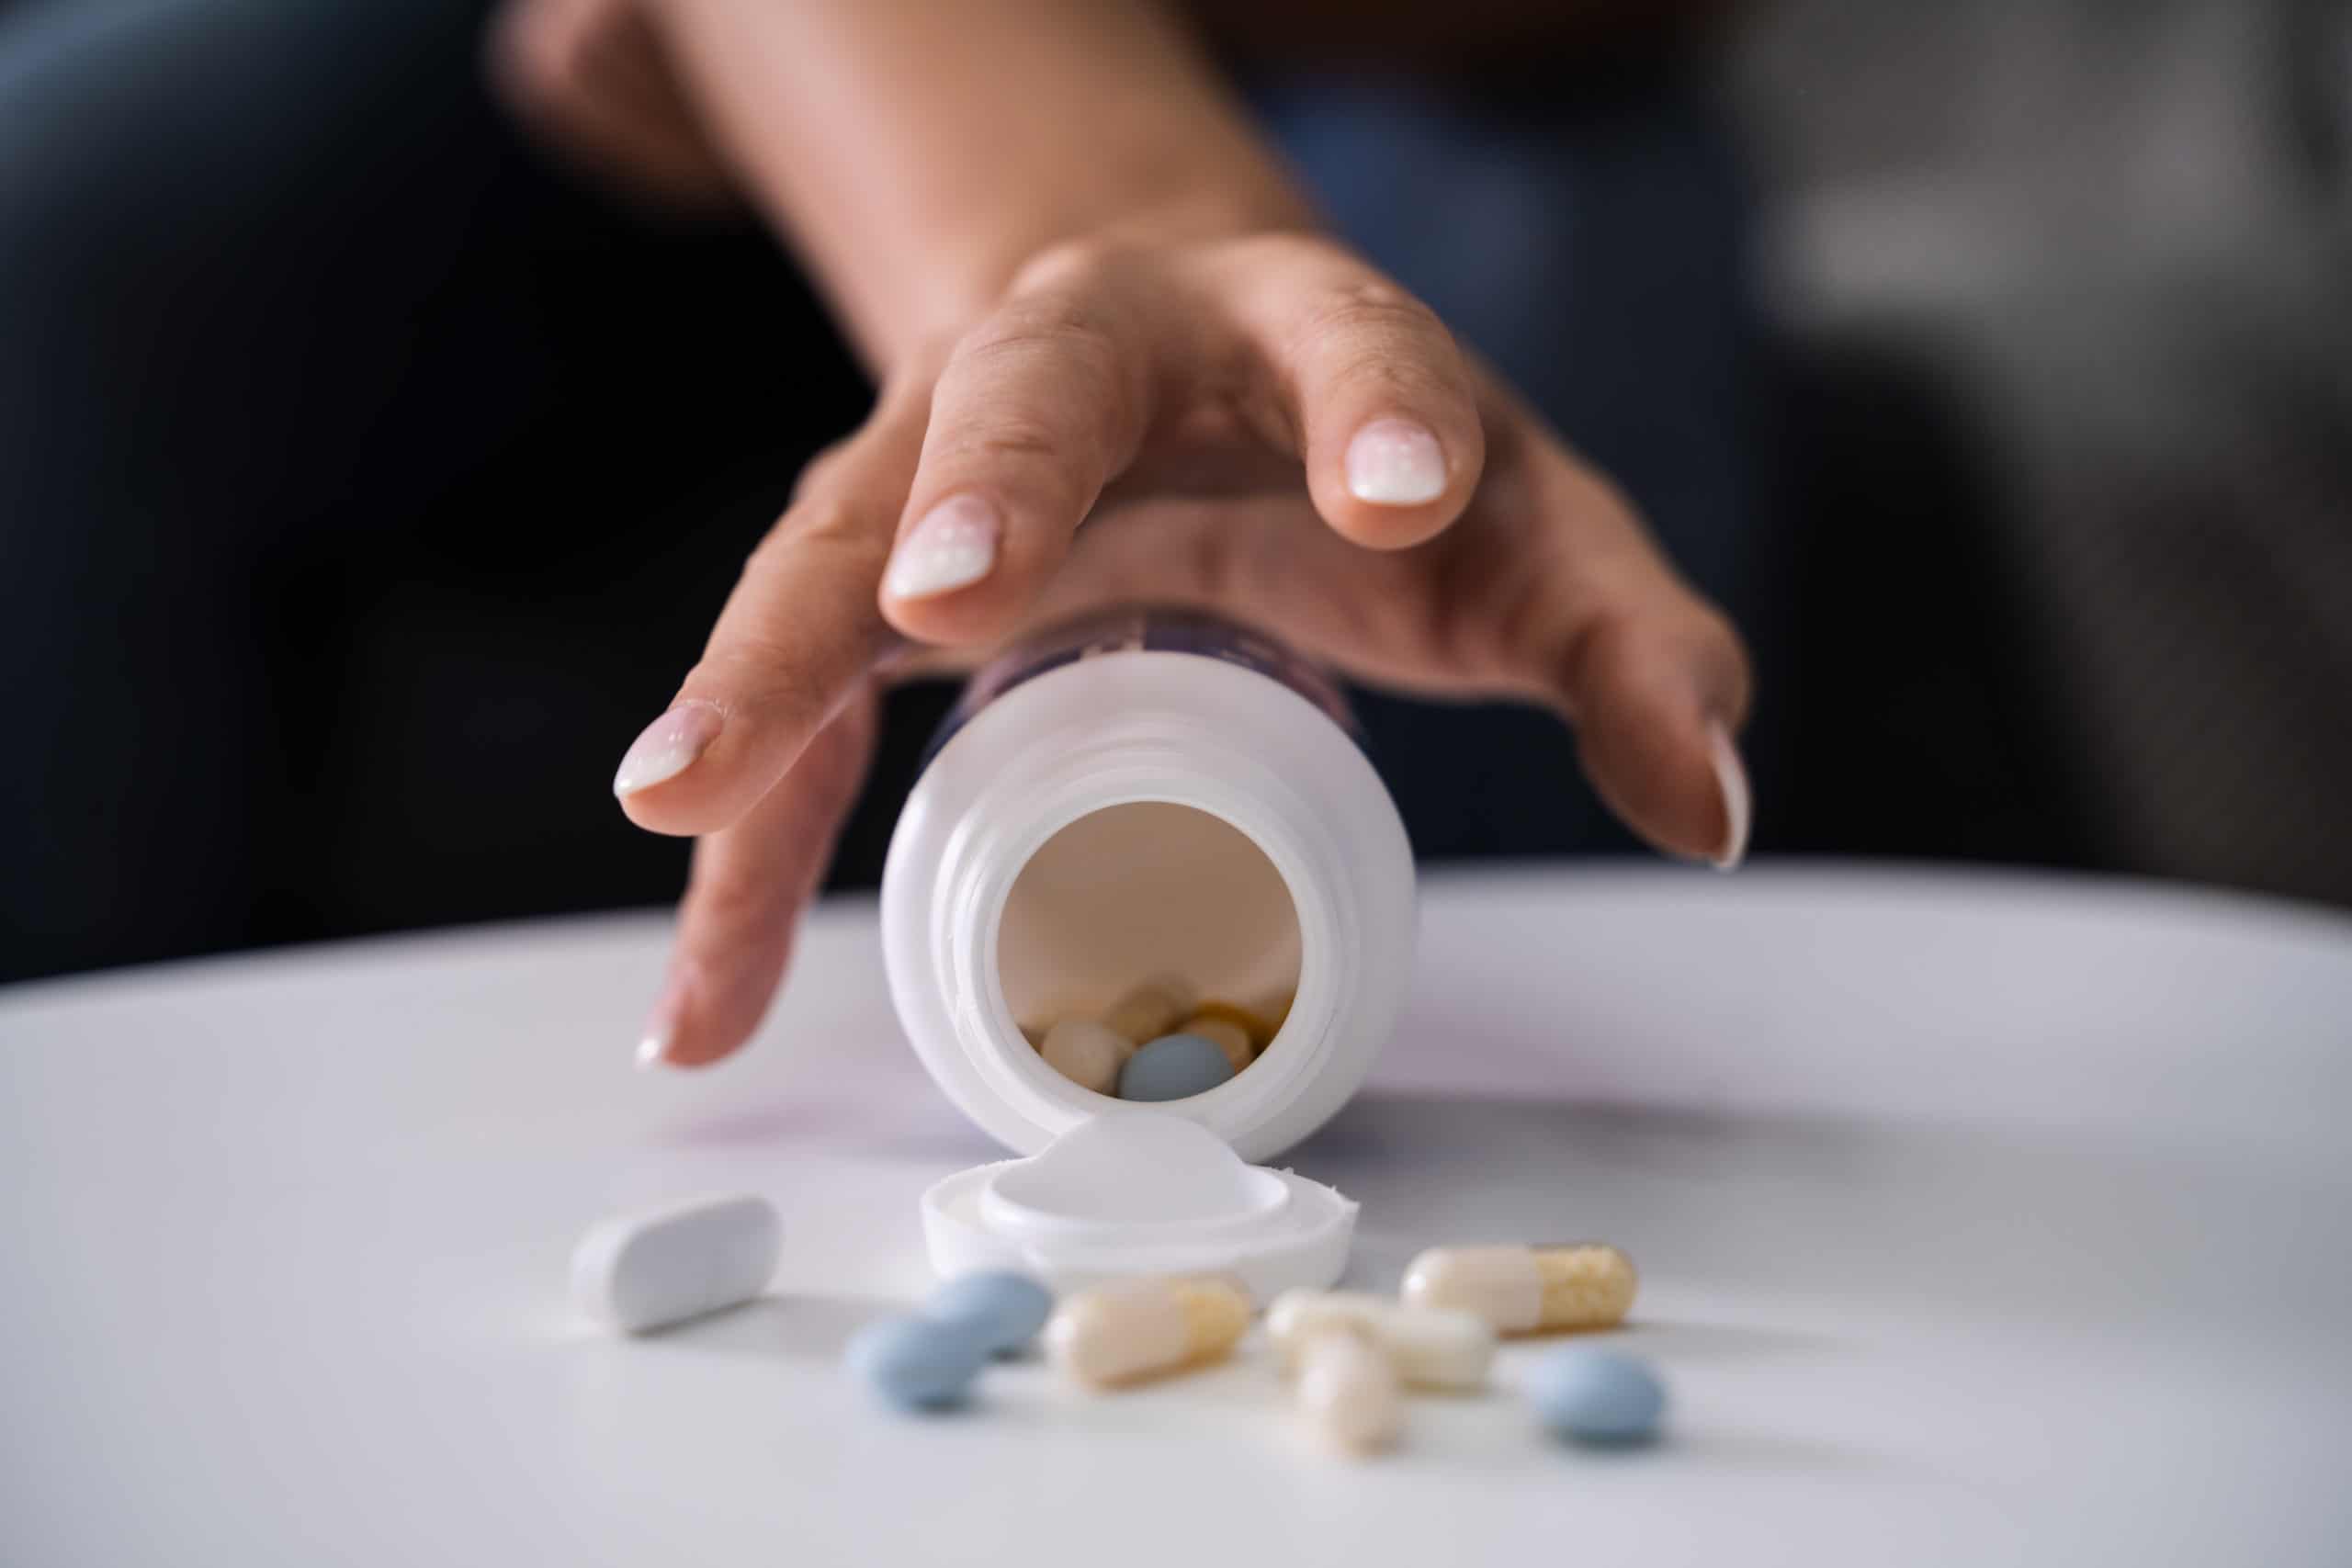 woman reaching for pill bottle full of addictive drugs